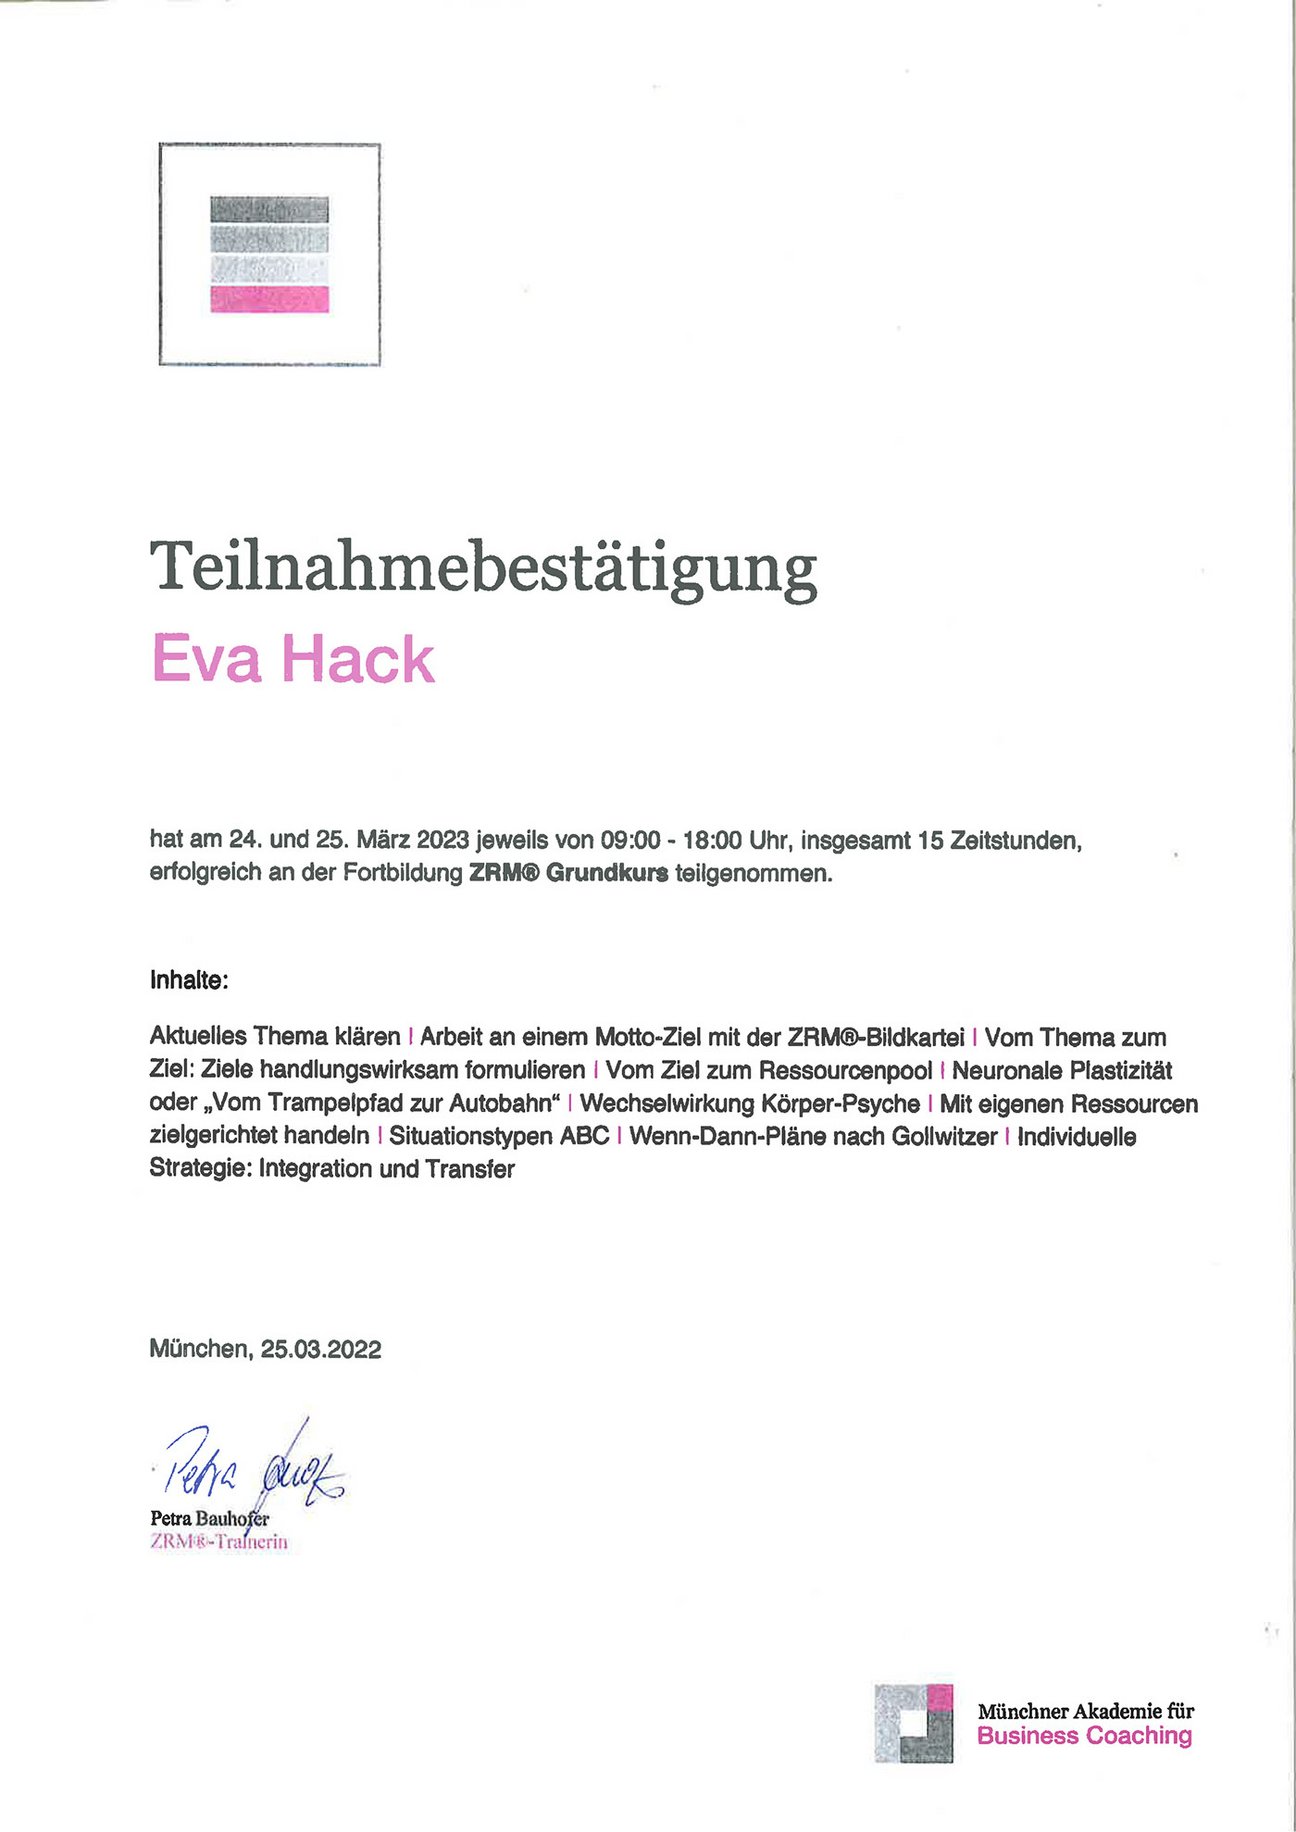 EVA-Hack-Muenchener-Akademie für Business-Coaching 2023